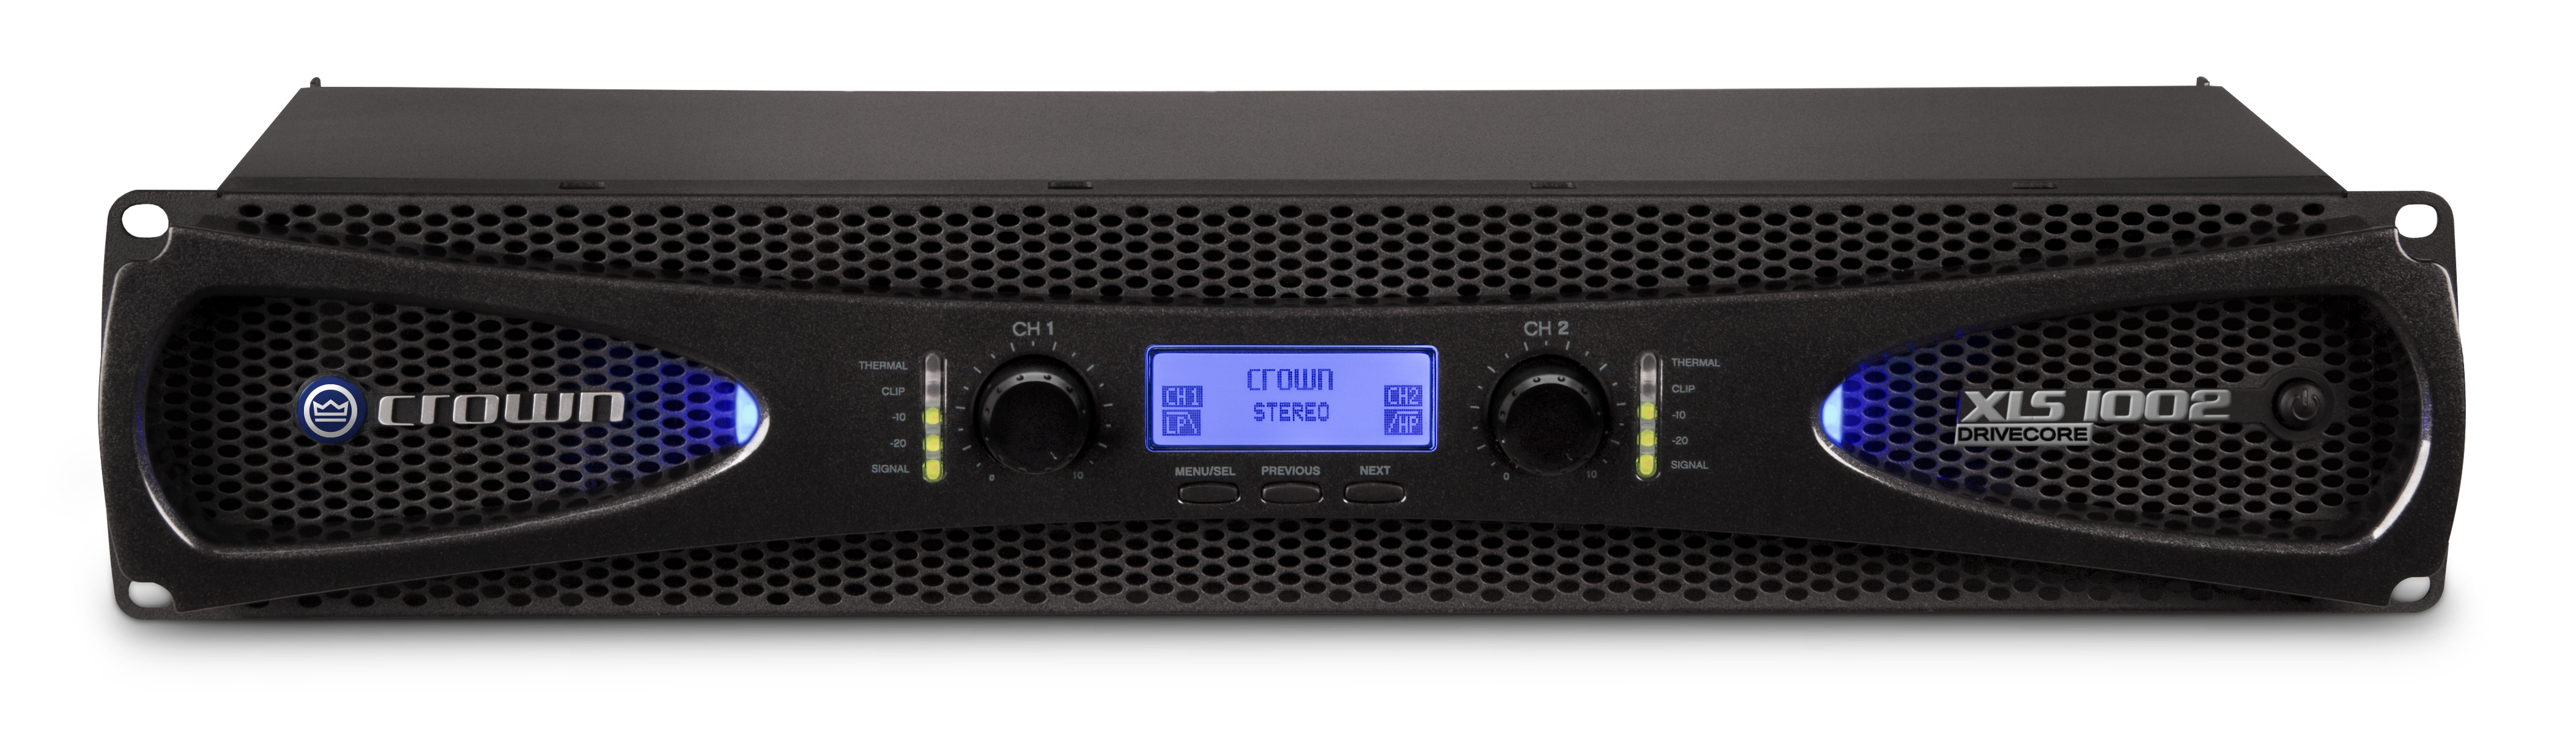 Xls 1002 Crown Audio Professional Power Amplifiers